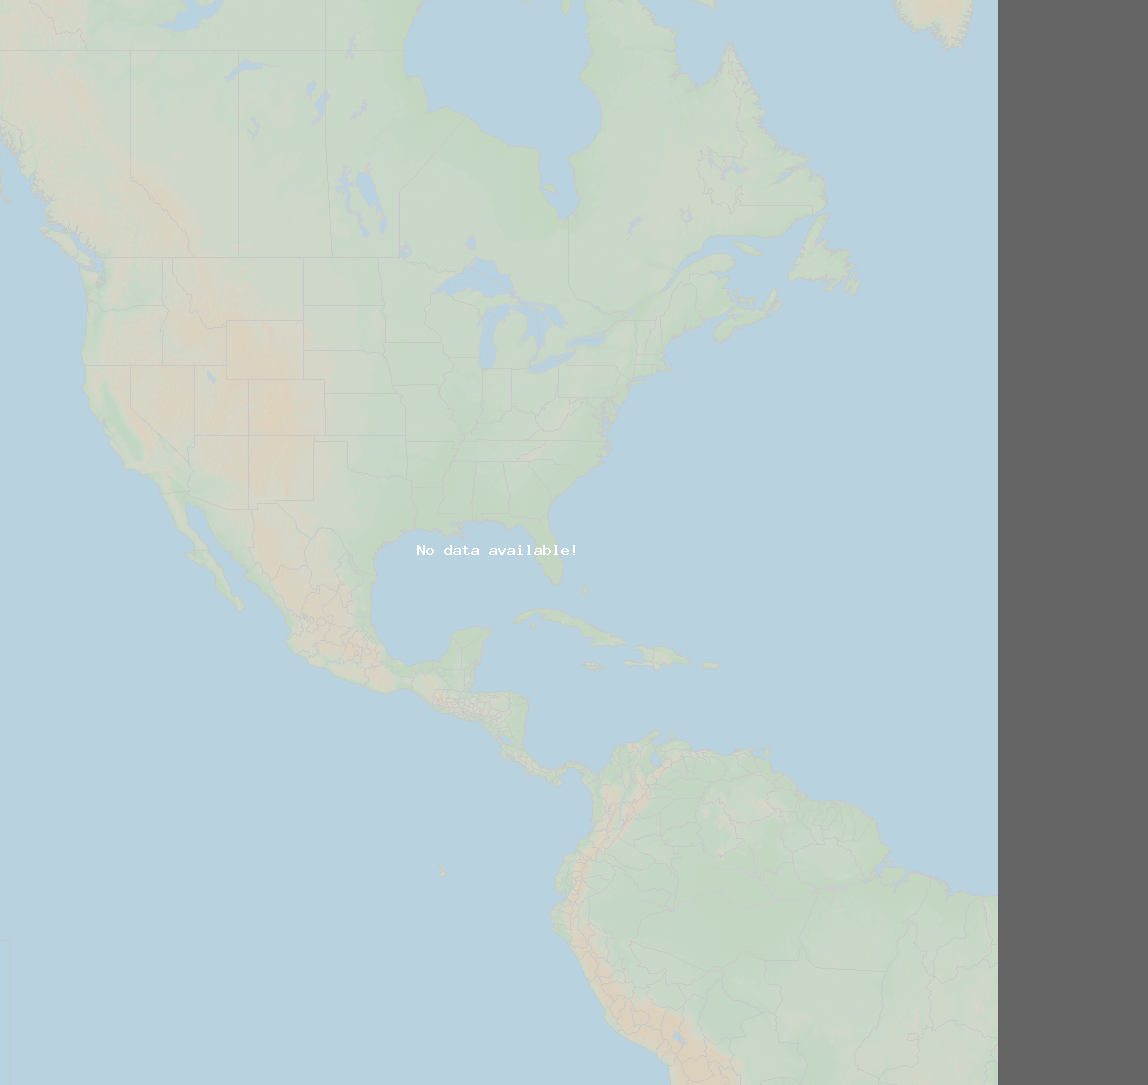 Andel blixtar (Station Lawrence-Dade2) North America 2019 Maj